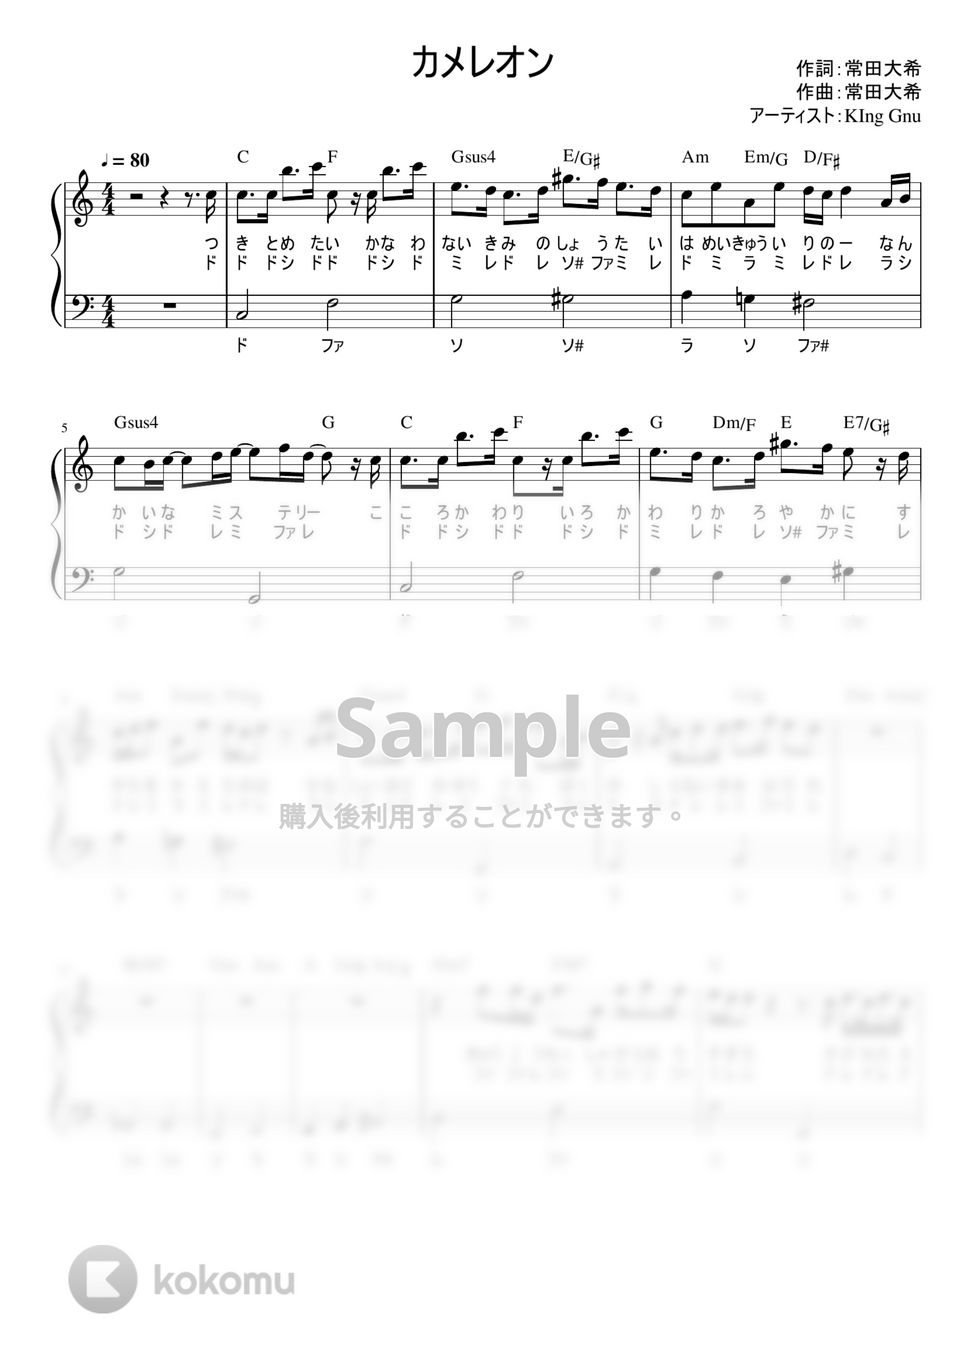 King Gnu - カメレオン (かんたん / 歌詞付き / ドレミ付き / 初心者) by piano.tokyo